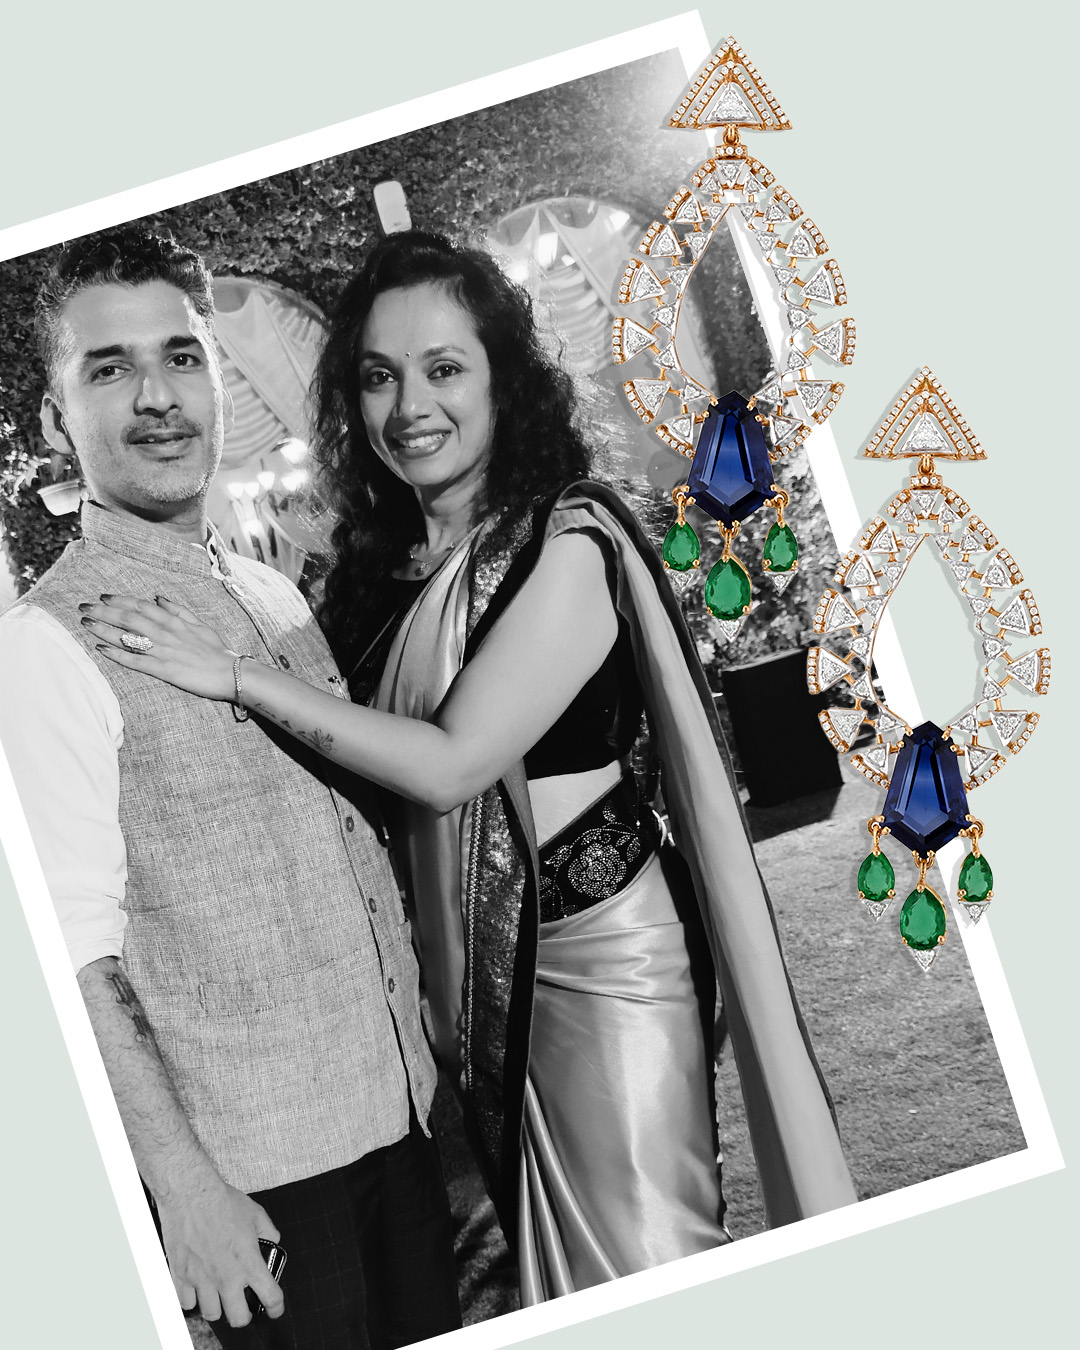 Satish and Kashish's Bond Strengthened with Diamond Surprises